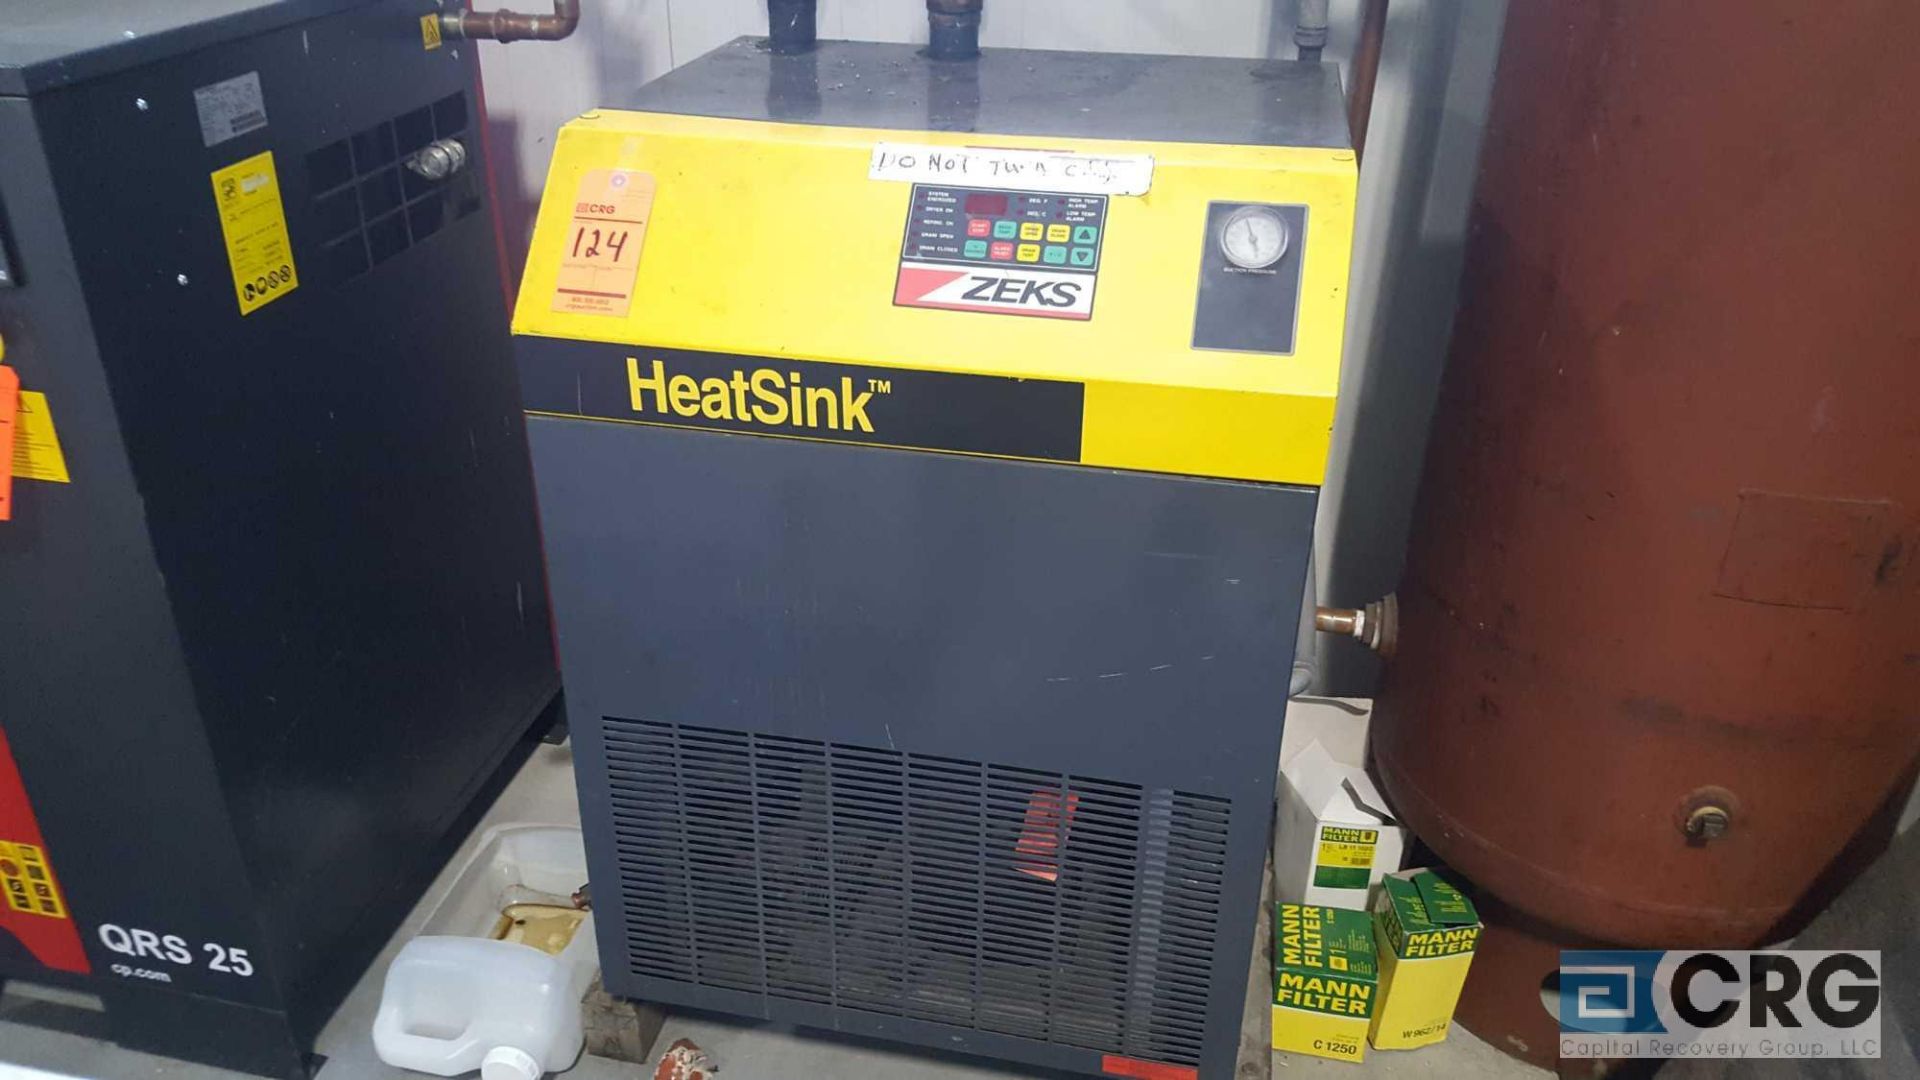 Zeks Air Dryer, heat sink, model number 200 HSEA 400, serial number 1 4 5 5 5 6, with 2lb charge